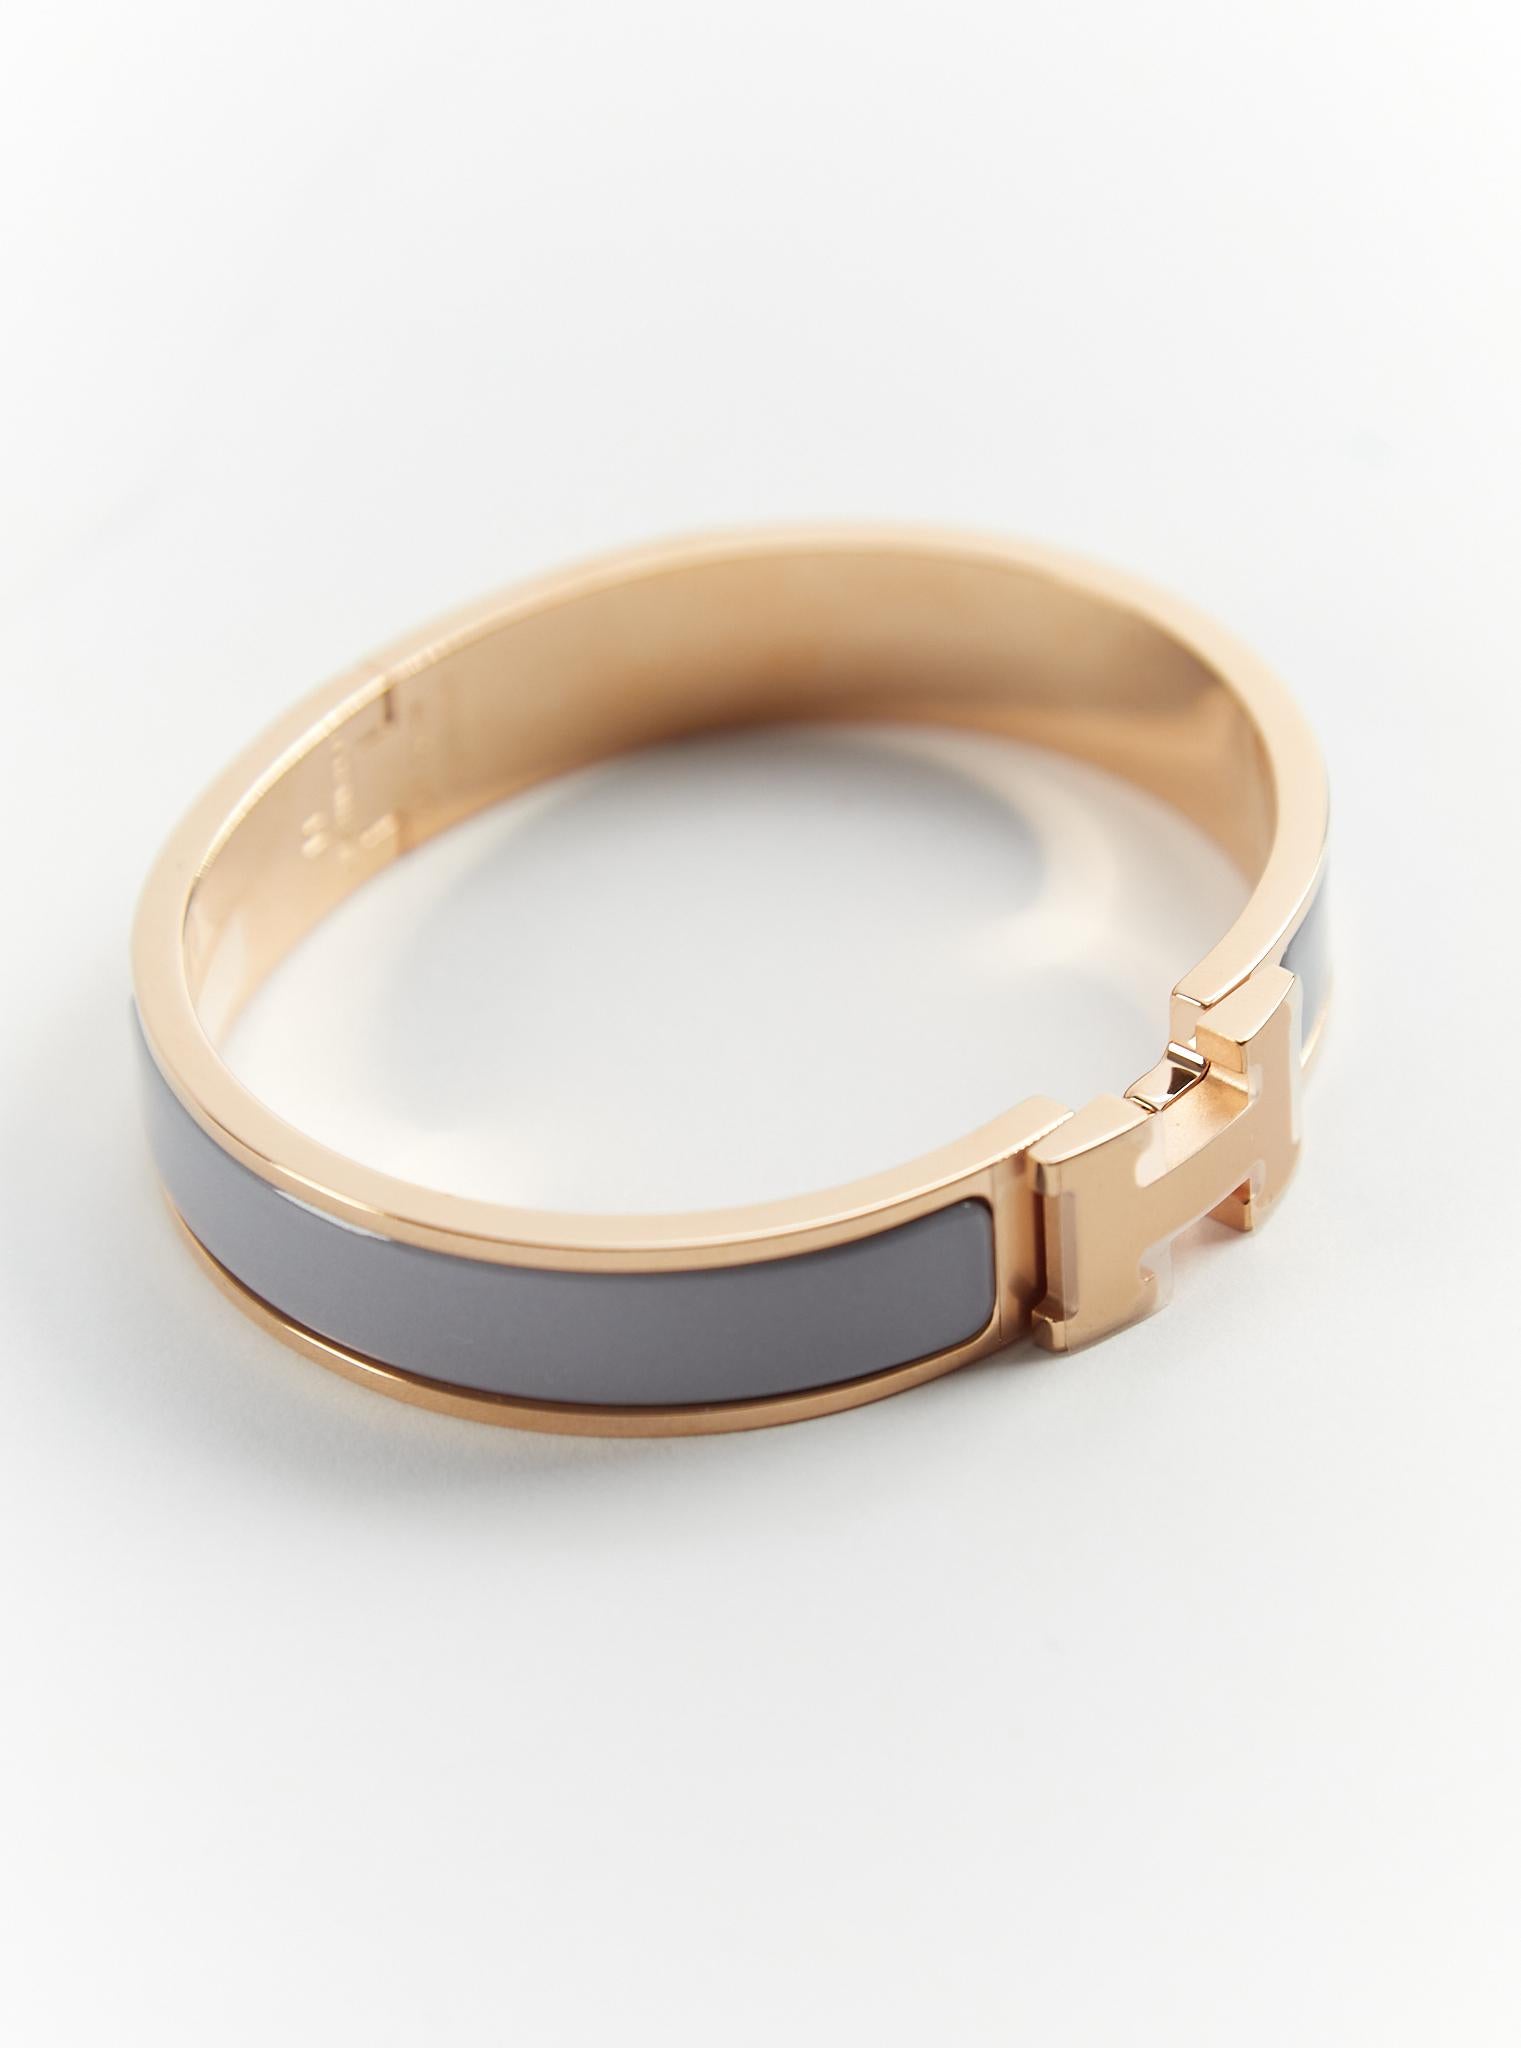 Hermès Clic H GM Bracelet in Gris-Gris and Rose Gold

Wrist size: 16.8 cm  Width: 8 mm

Made in France